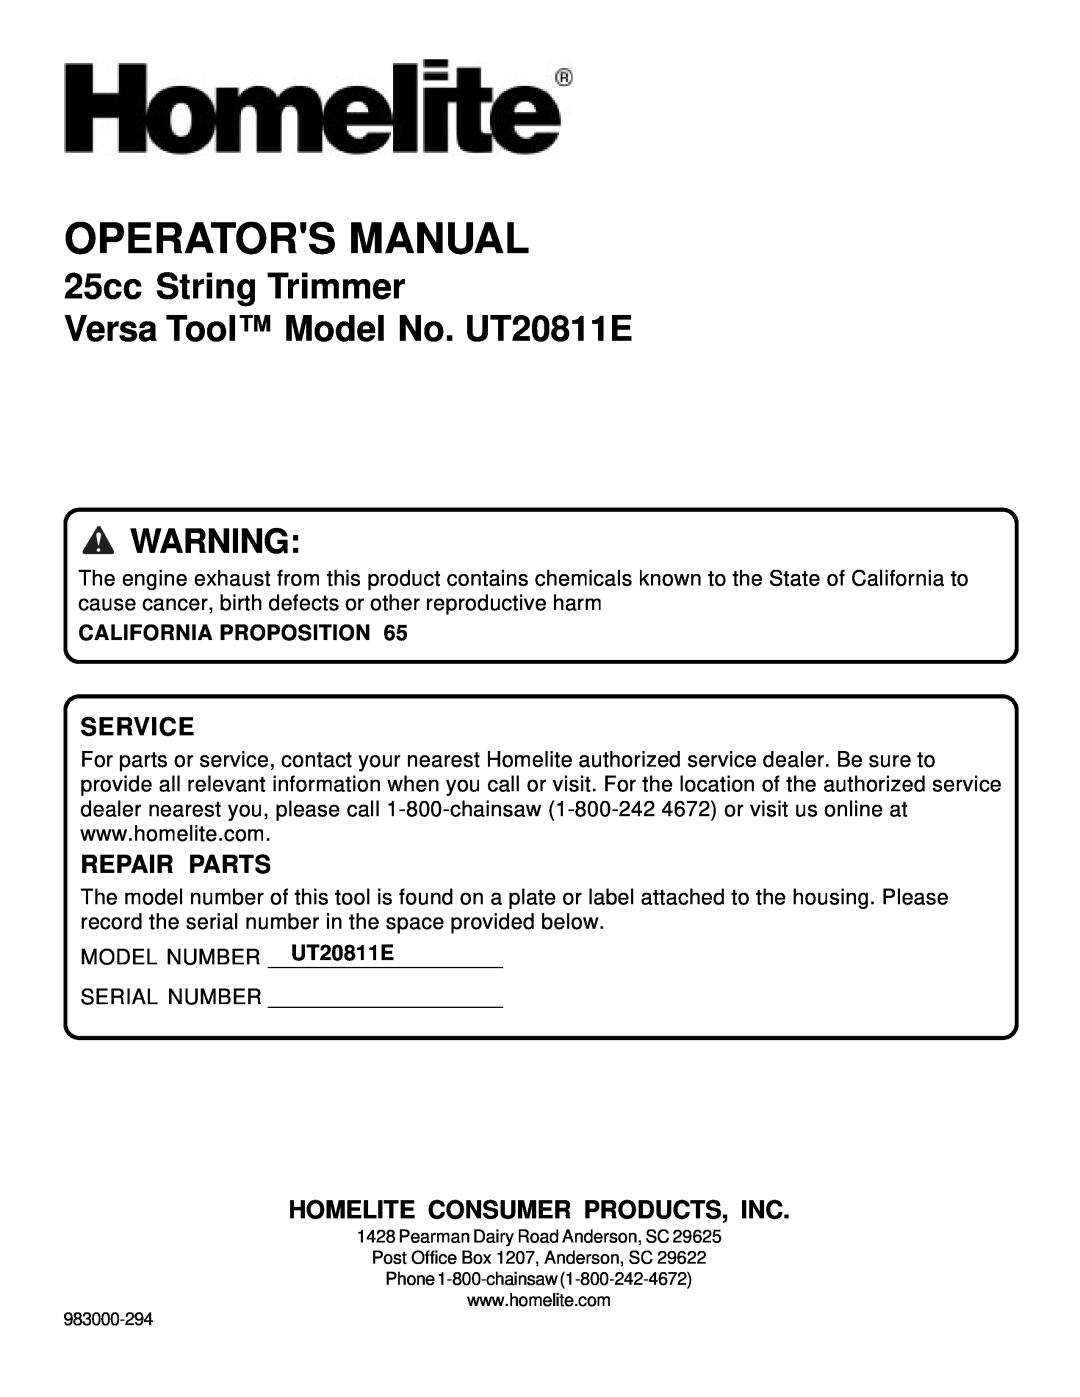 Homelite UT20811E manual Service, Repair Parts, Homelite Consumer Products, Inc, California Proposition, Operators Manual 